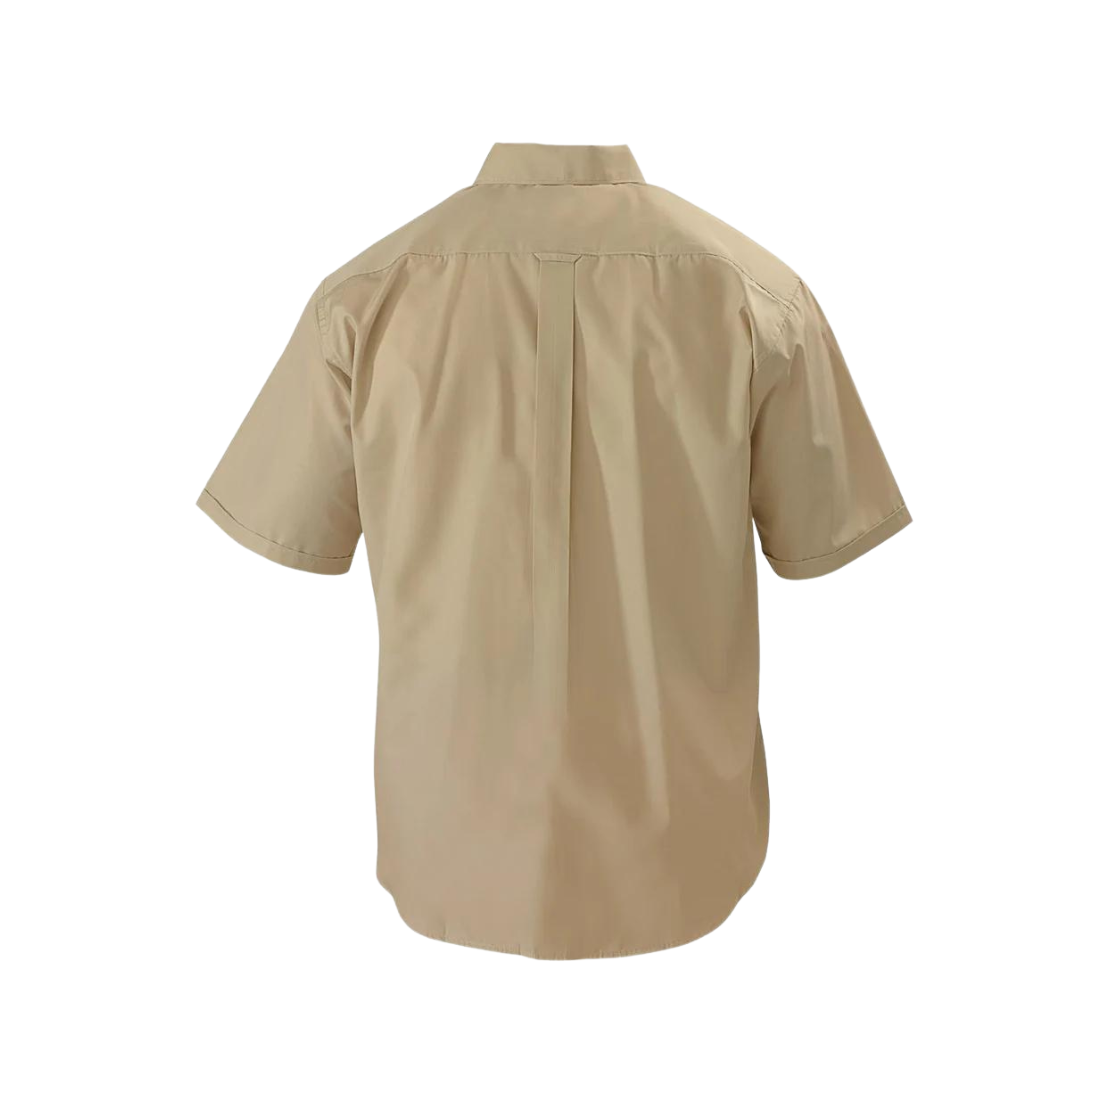 Permanent Press Shirt - Short Sleeve Workwear by Bisley | The Bloke Shop